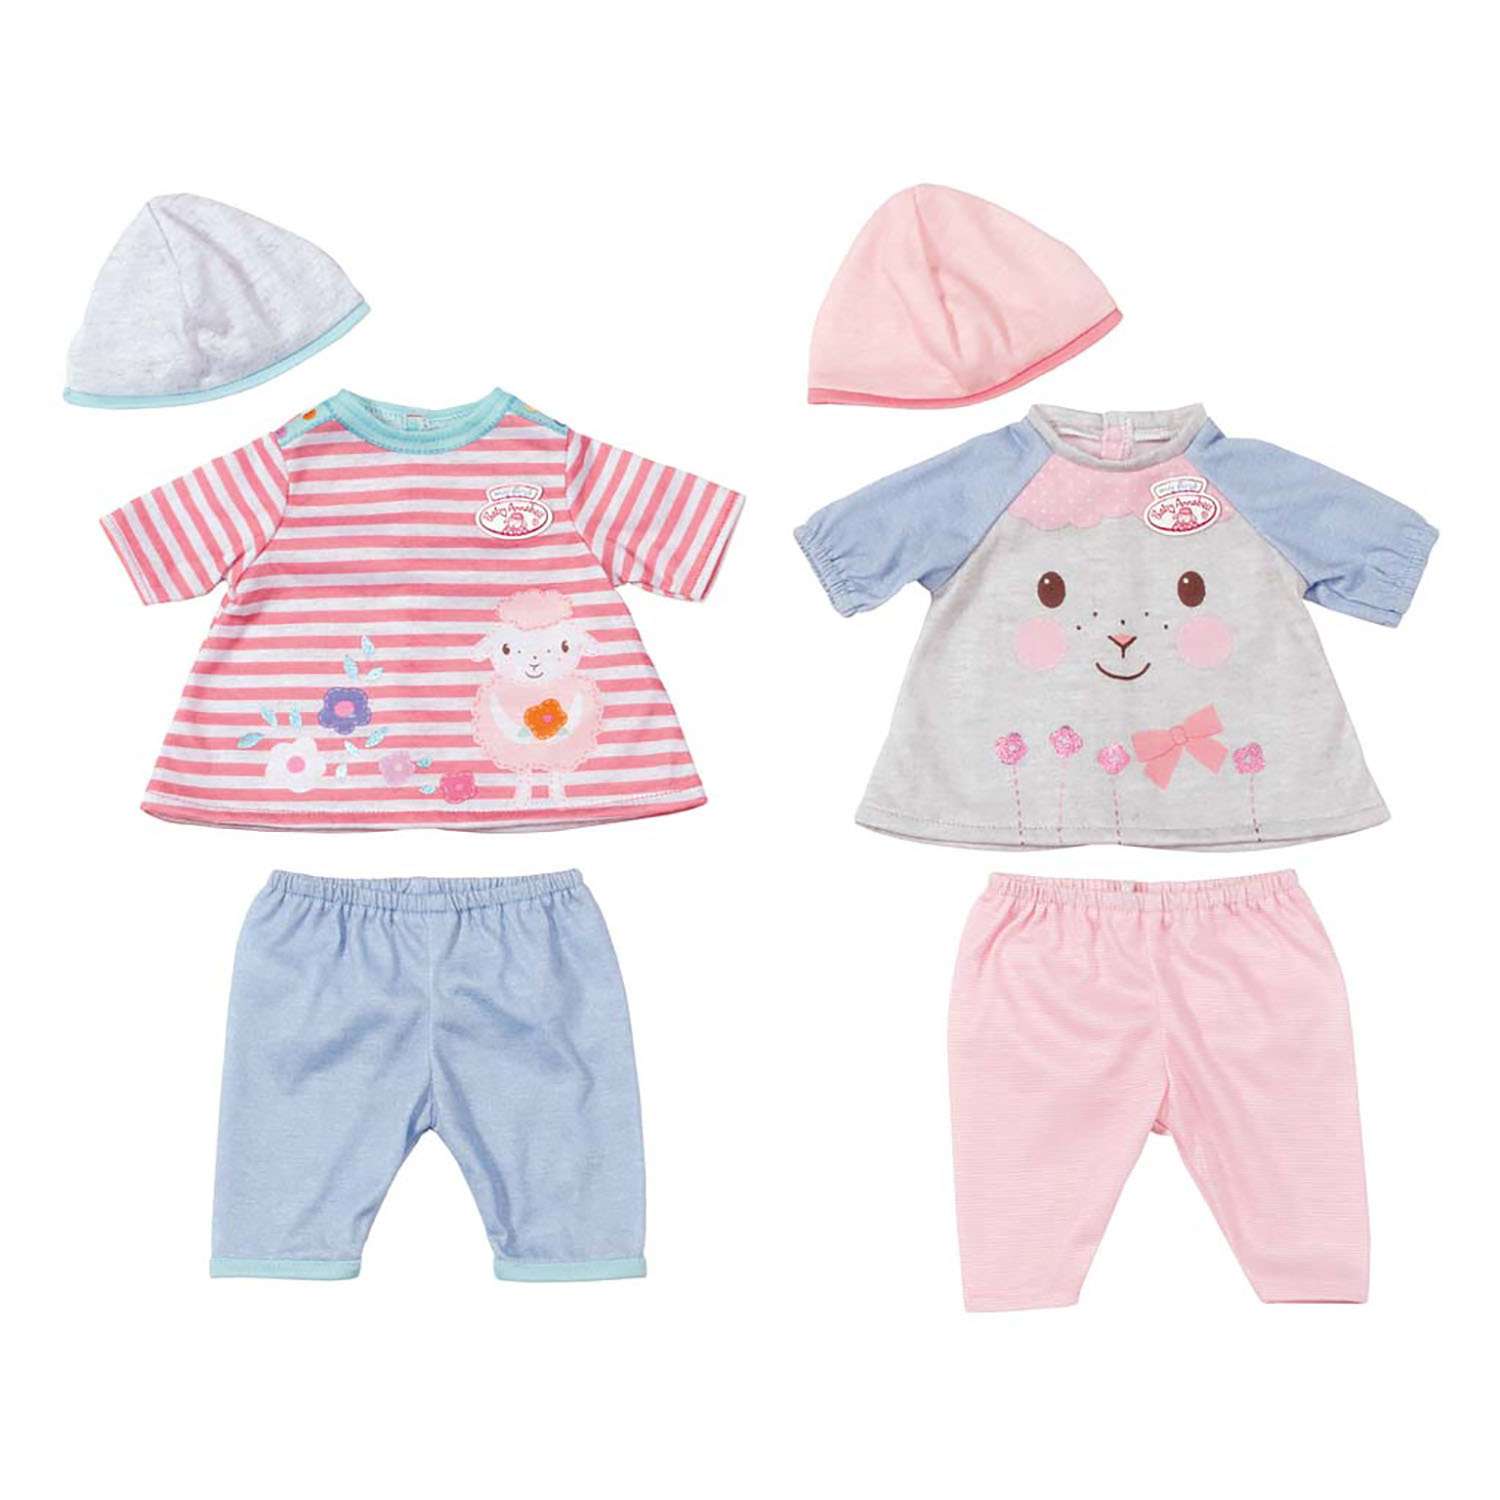 Zapf Creation комплект одежды для куклы my first Baby Annabell 794371